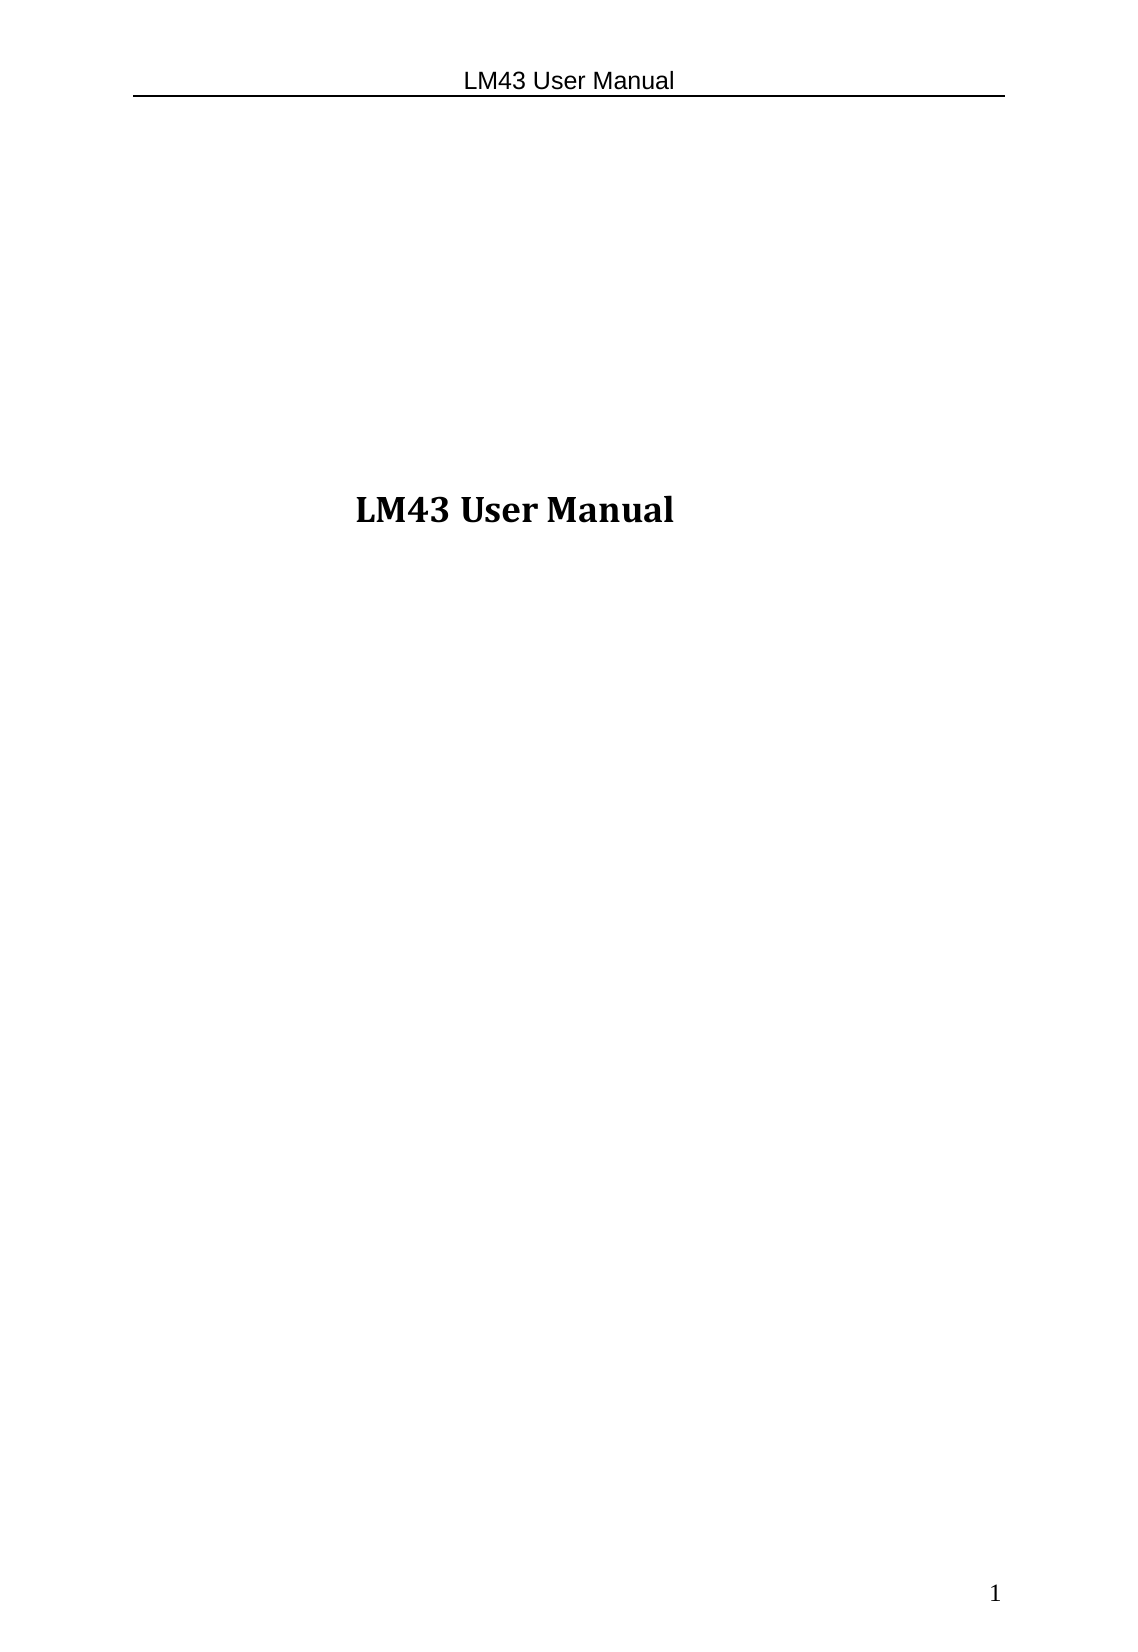                                                   LM43 User Manual  1LM43UserManual